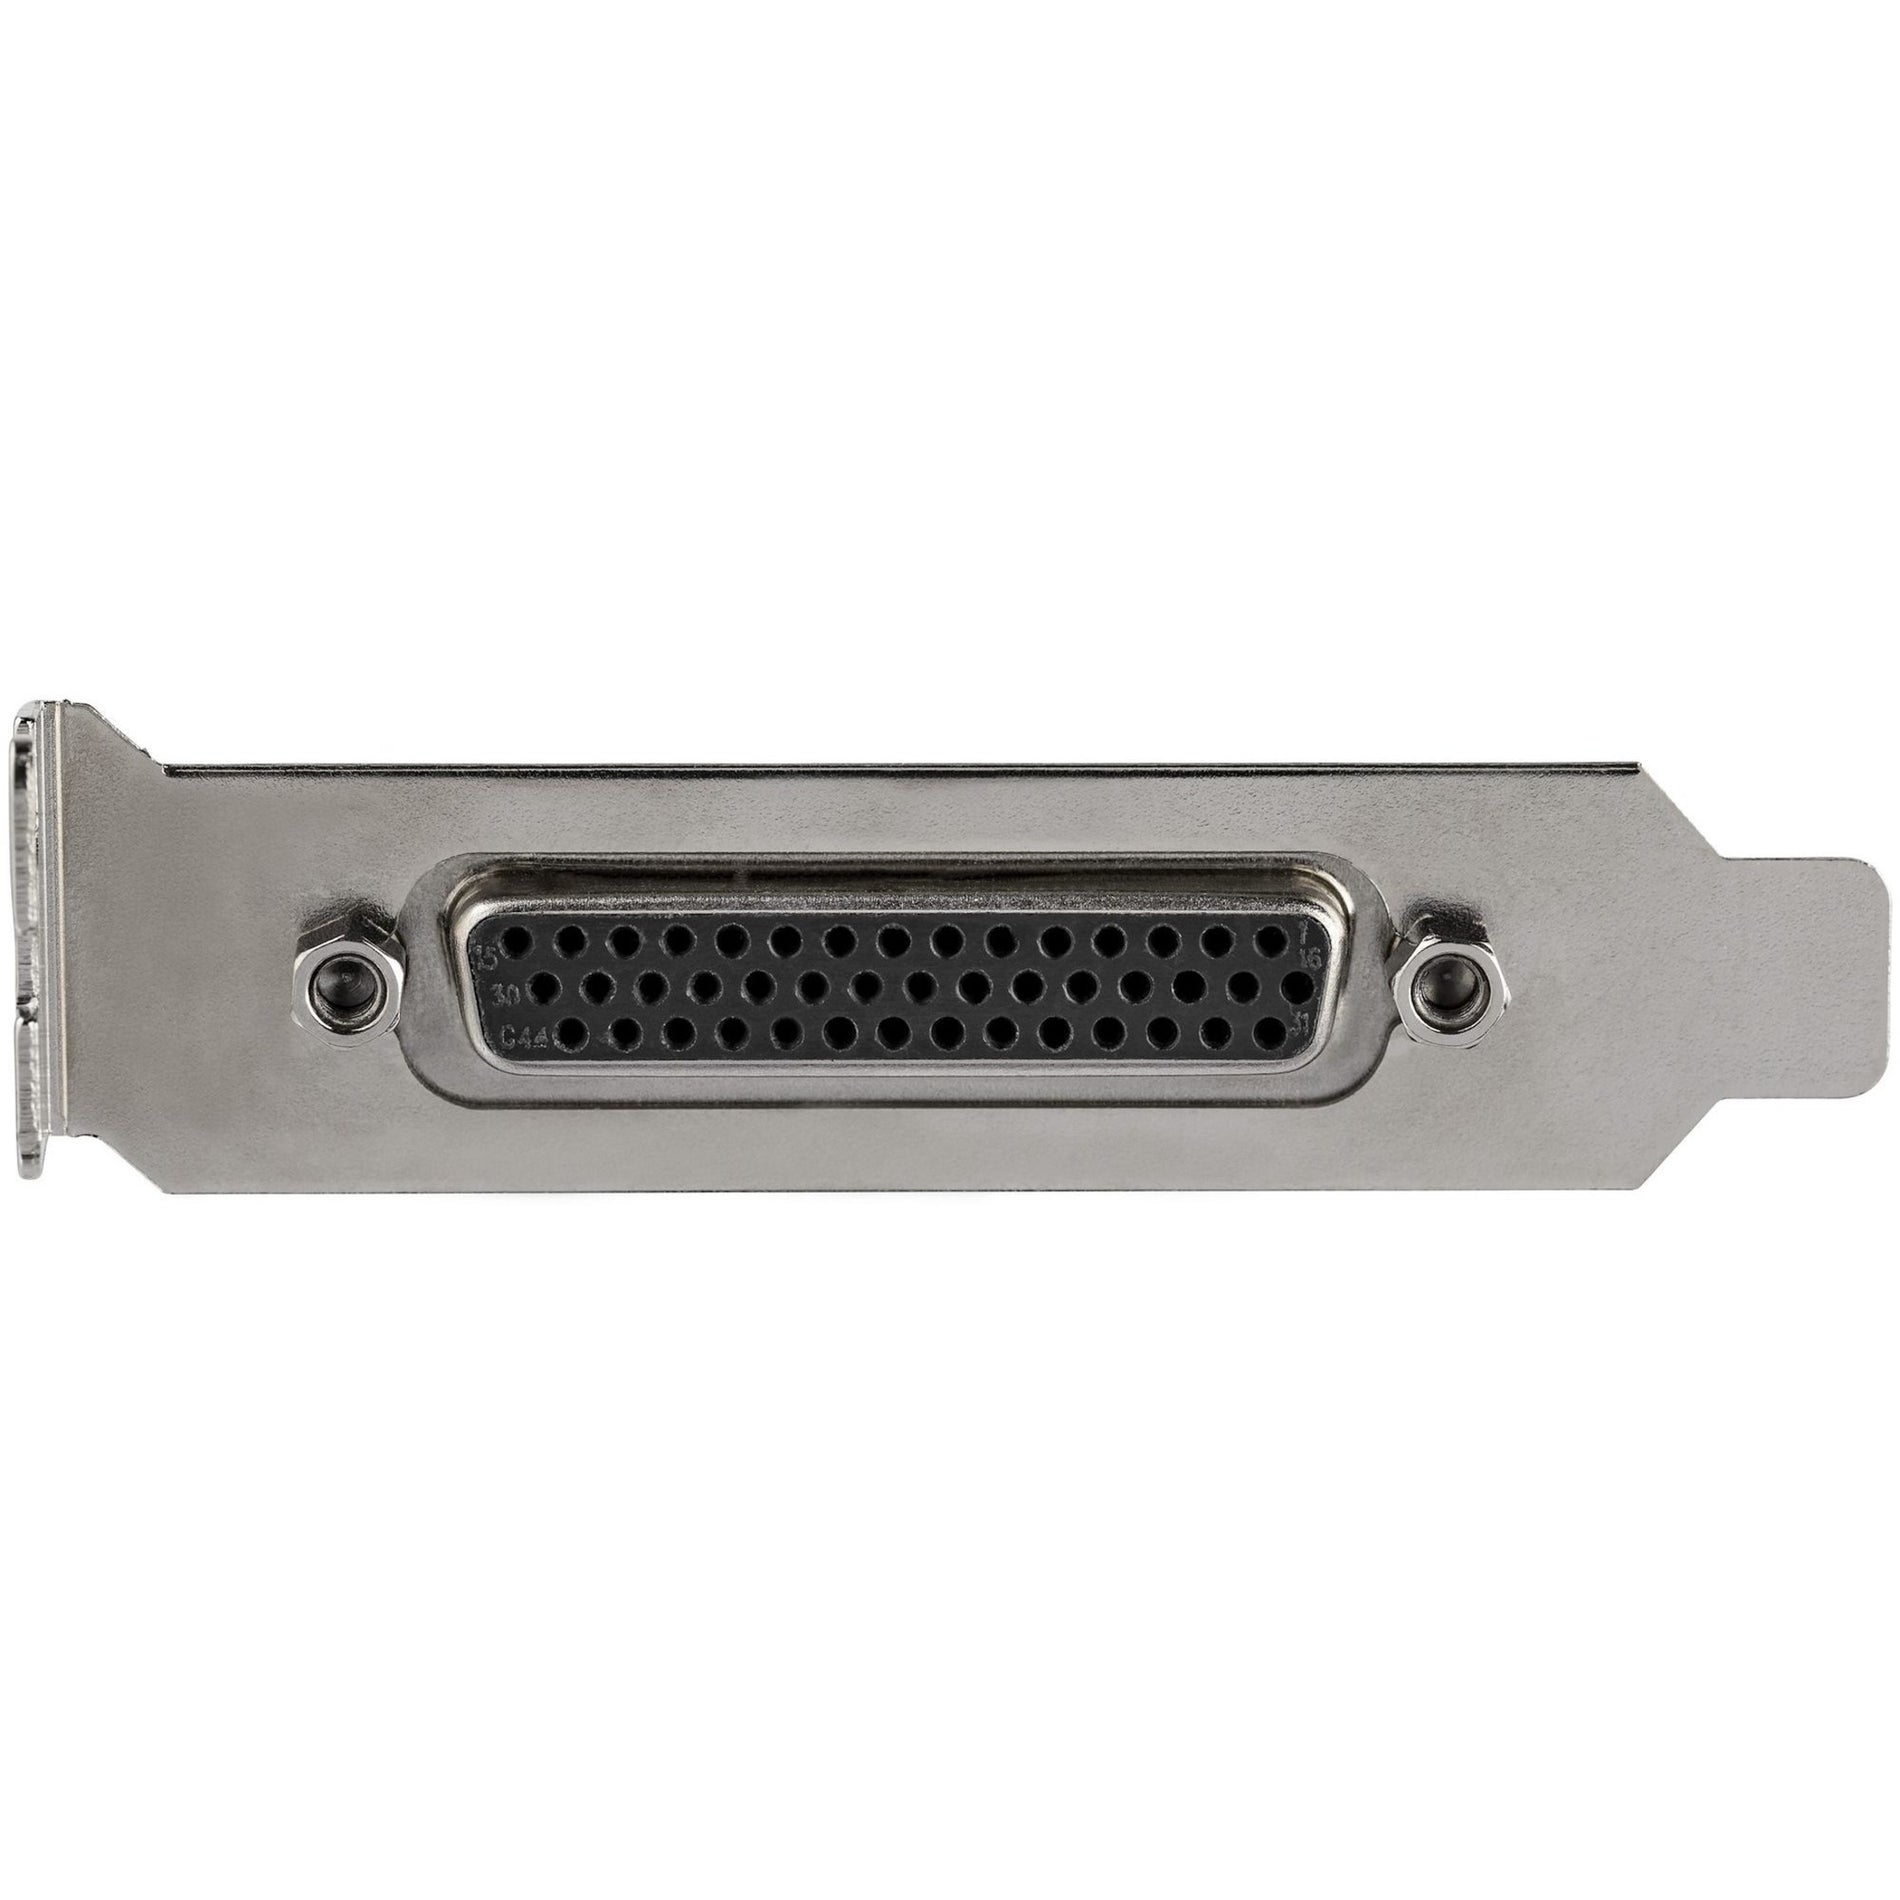 StarTech.com PEX4S953LP 4-Port PCI Express RS232 Serial Adapter Card - Low Profile, 16950 UART, 256-byte FIFO Cache